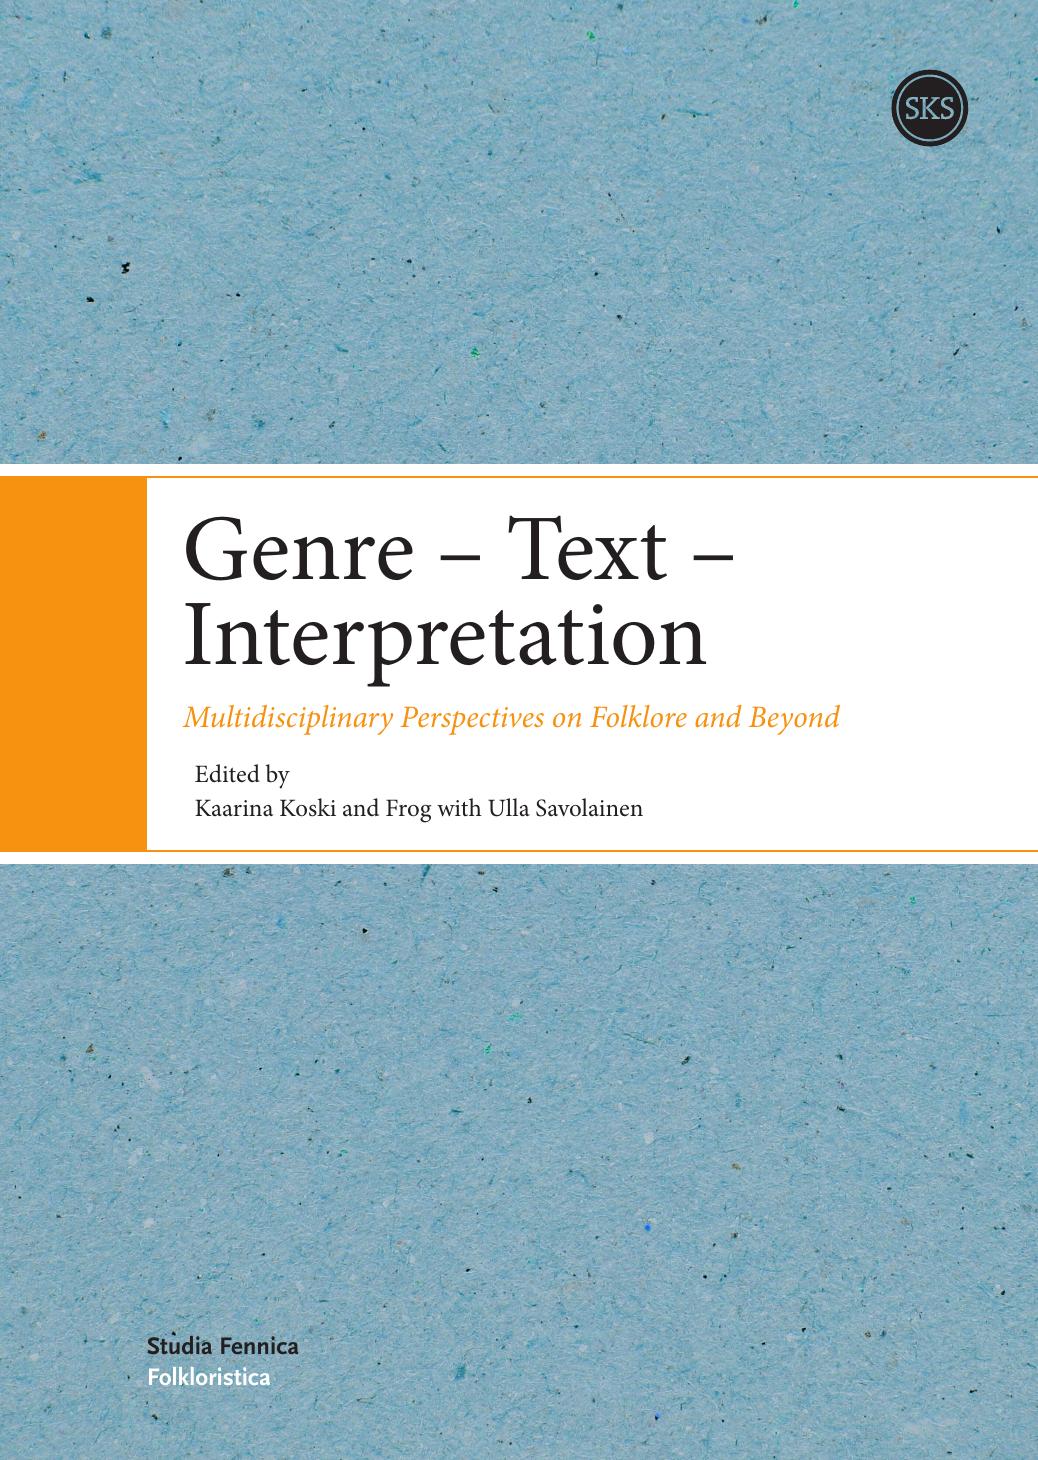 Genre - Text - Interpretation: Multidisciplinary Perspectives on Folklore and Beyond